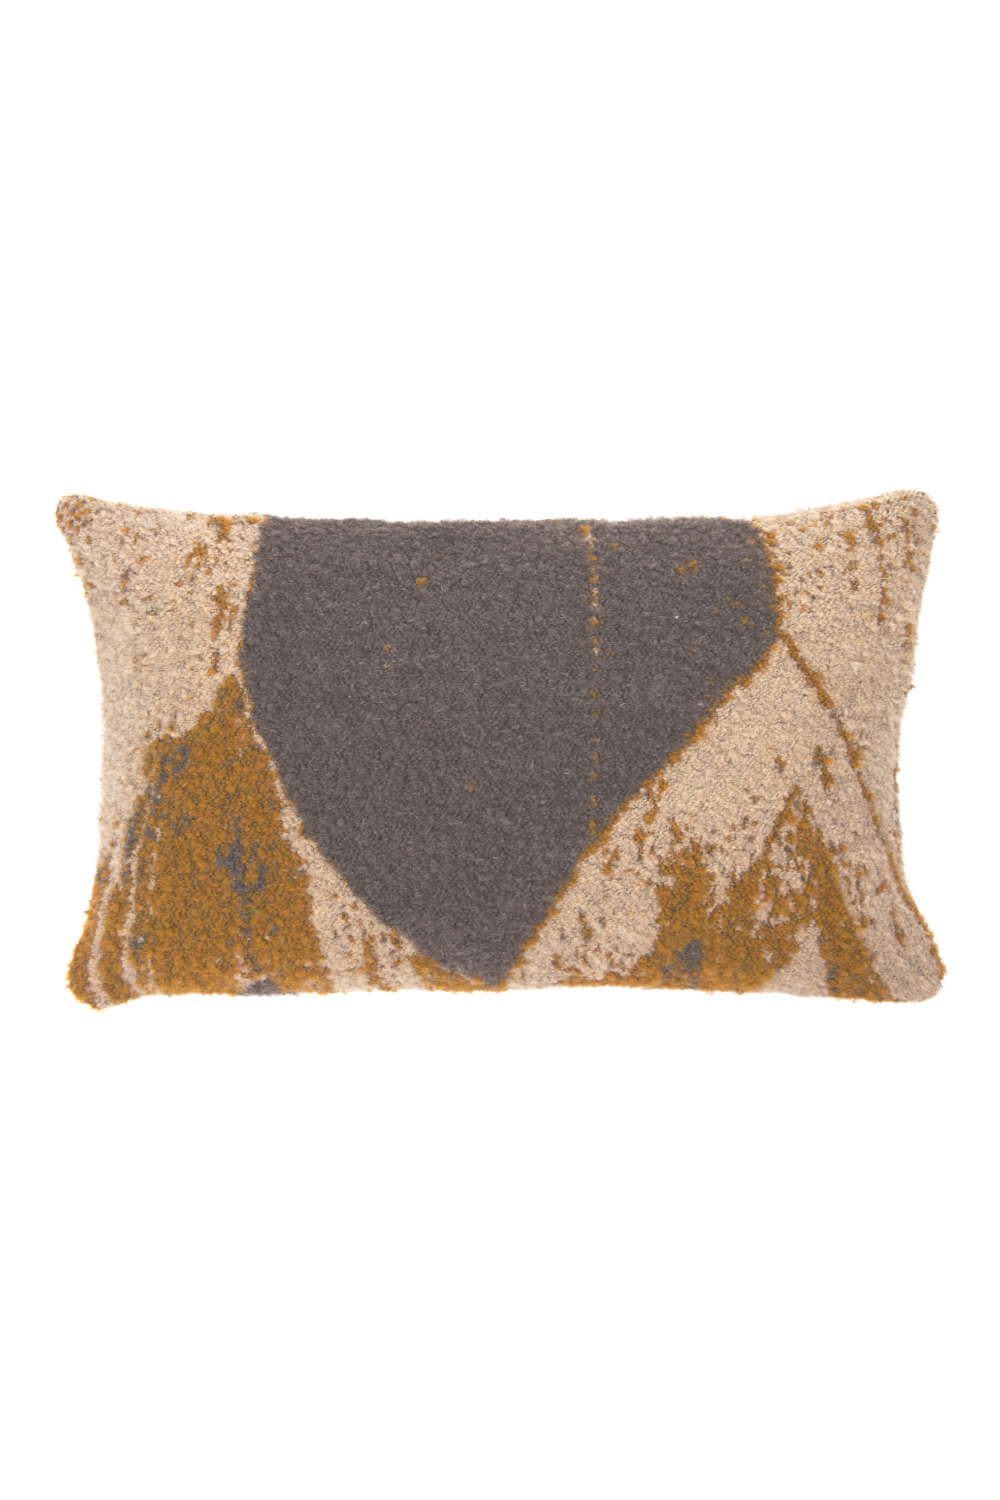 Jacquard Abstract Throw Pillows (2) | Ethnicraft Avana | OROA.com